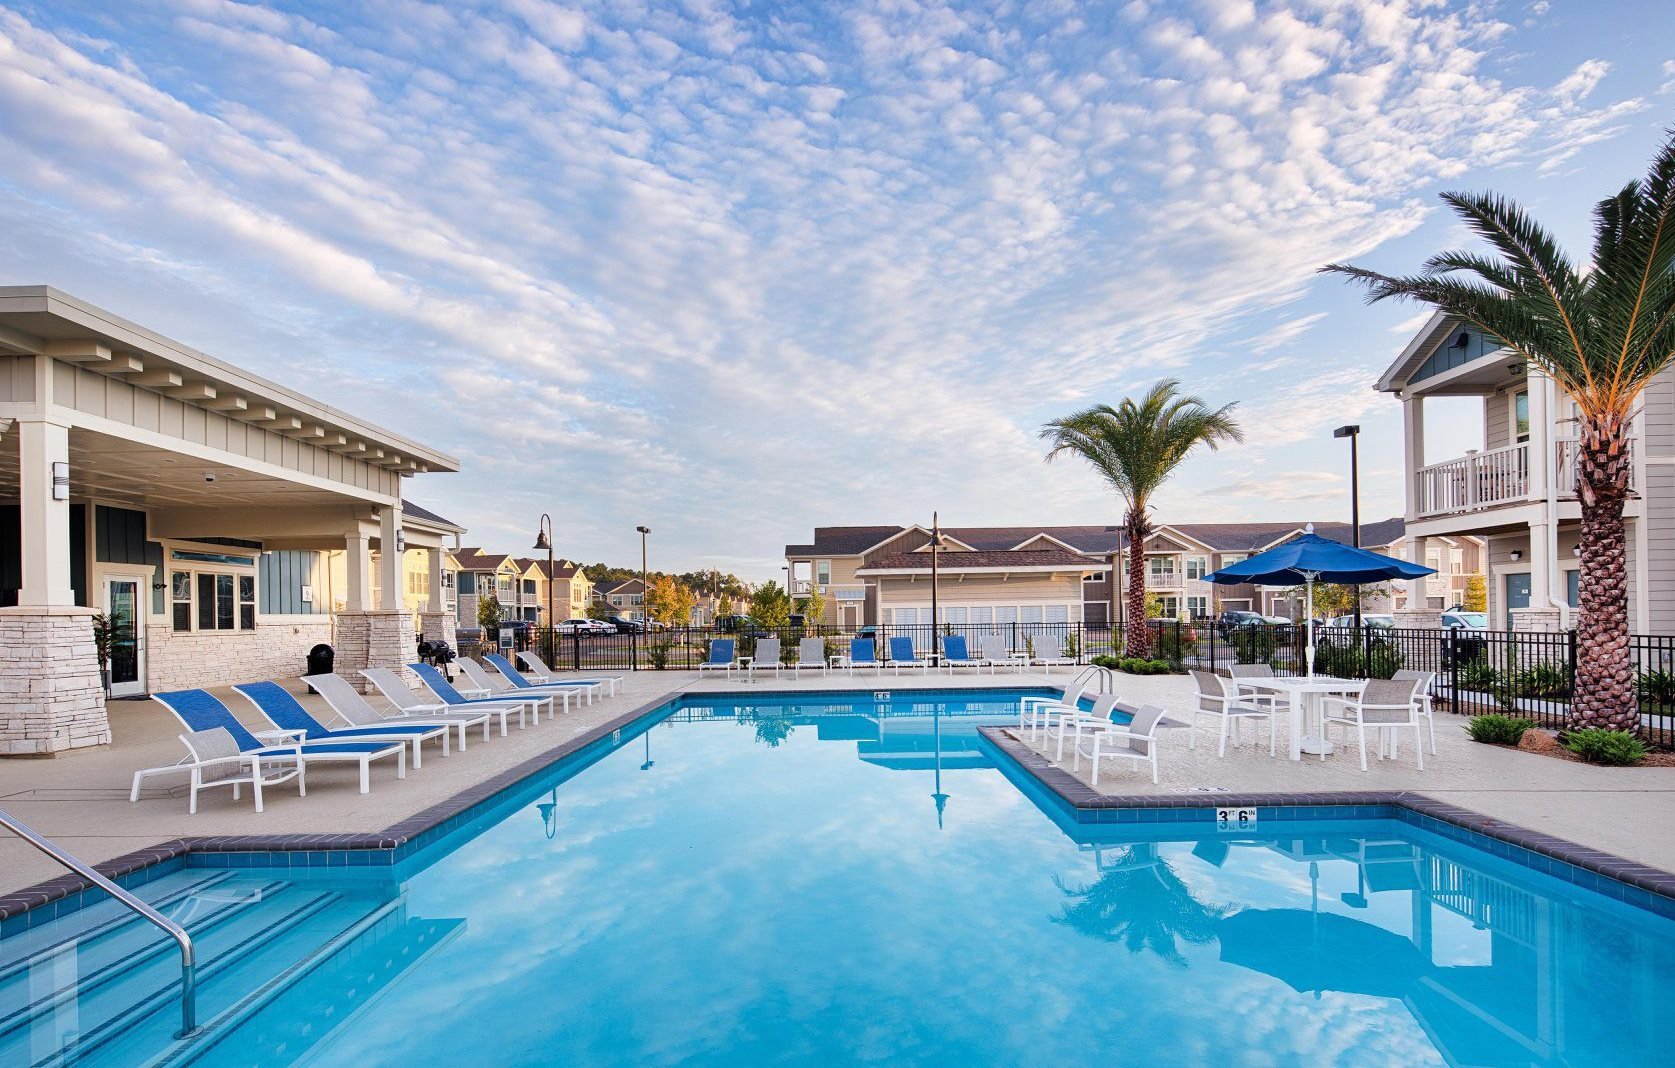 Make a splash in the sparkling swimming pool at The Retreat at Juban in Denham Springs, LA